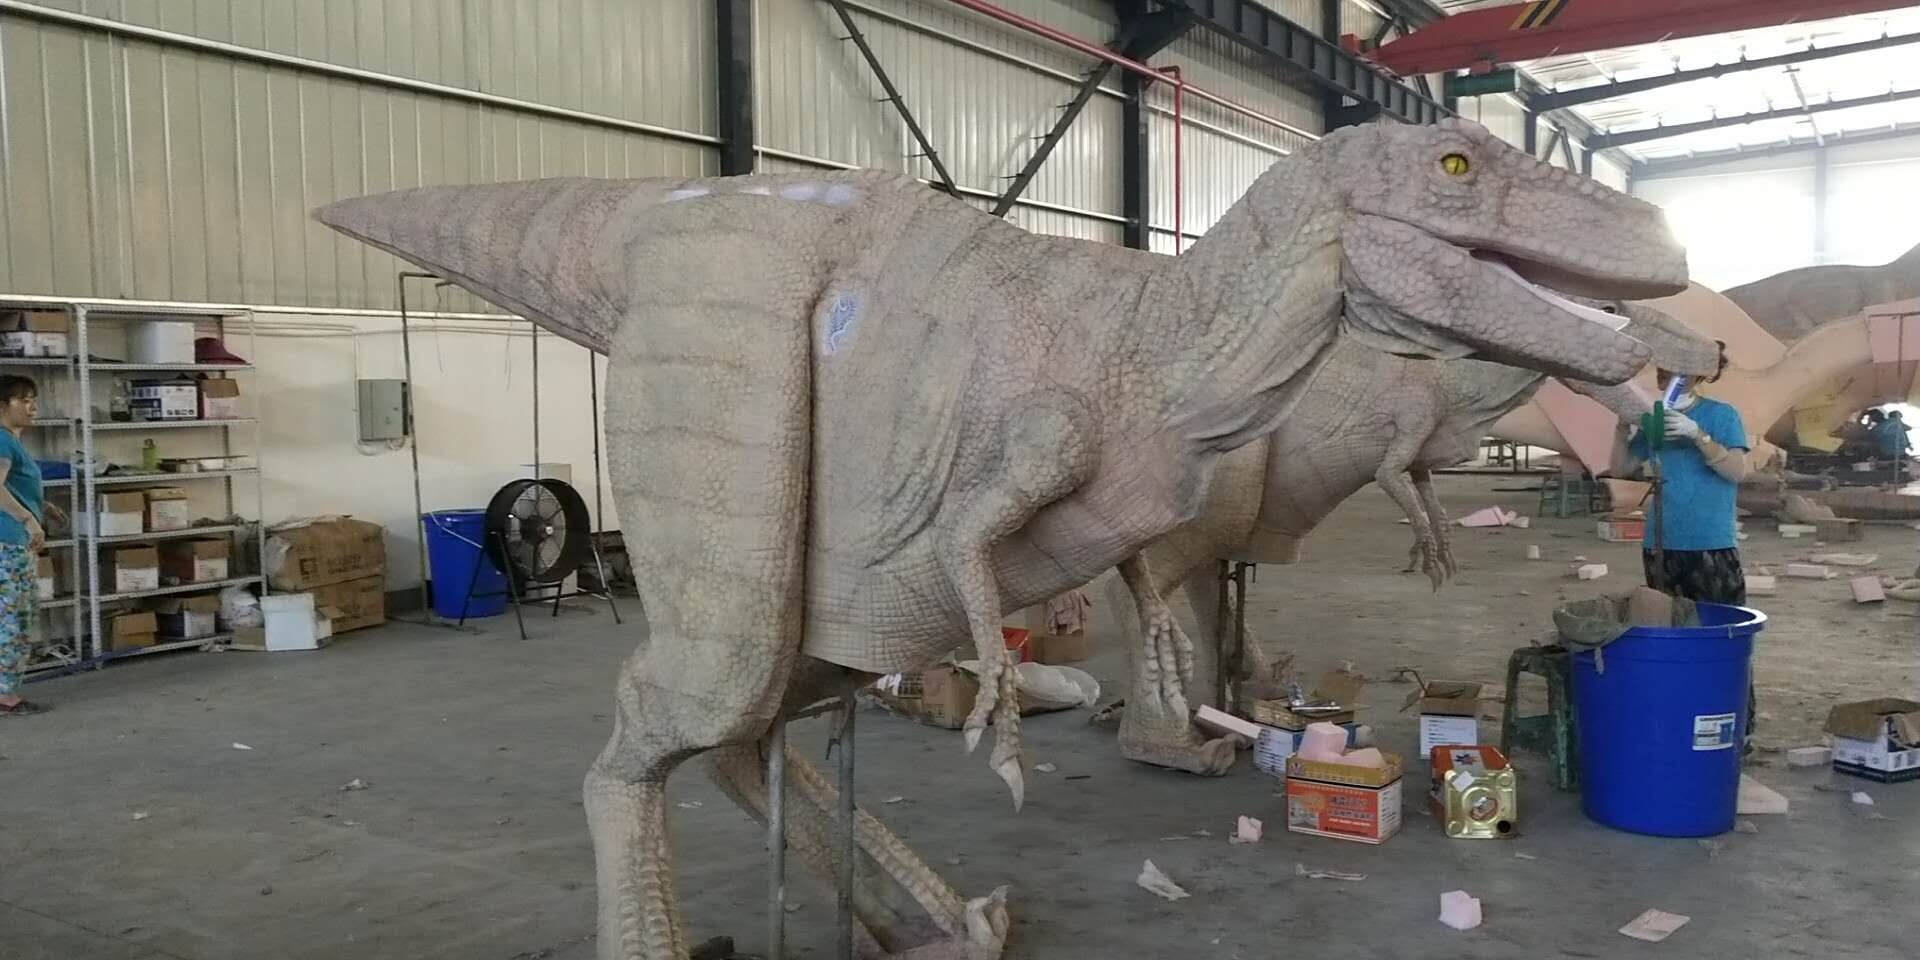 buy a realistic dinosaur costume.jpg